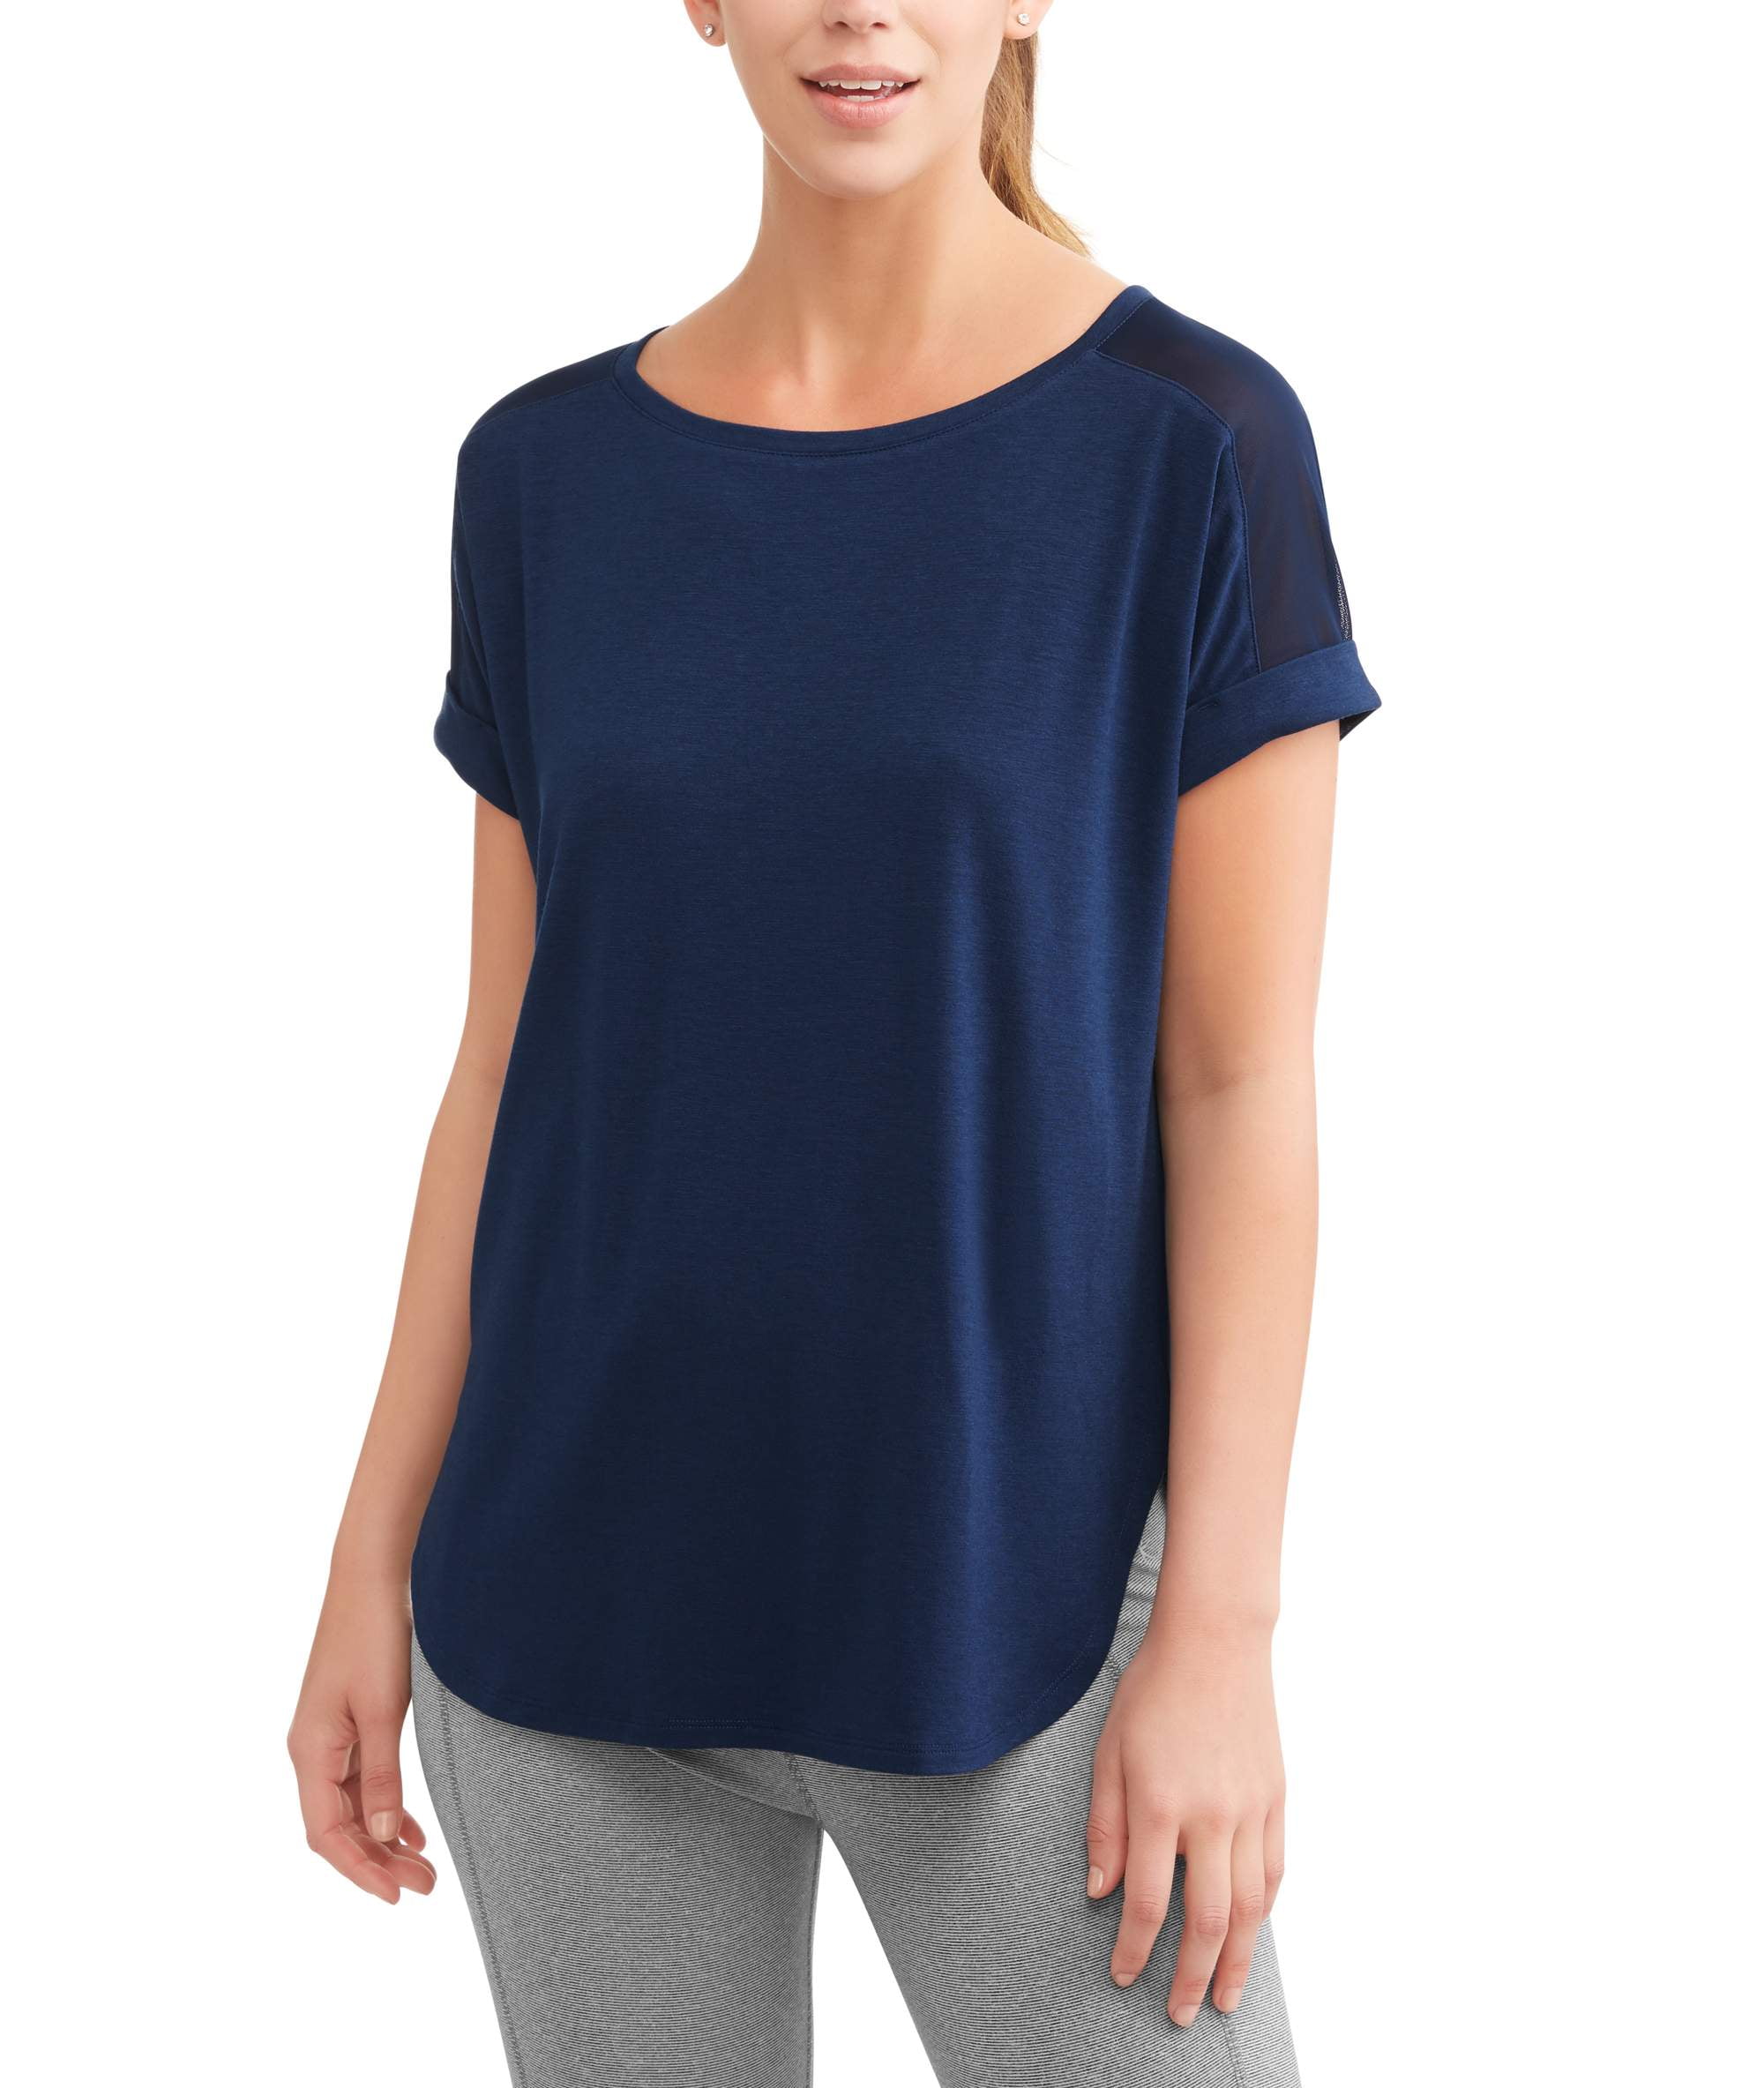 Women's Active Short Sleeve Crewneck T-Shirt With Mesh Insert - Walmart.com